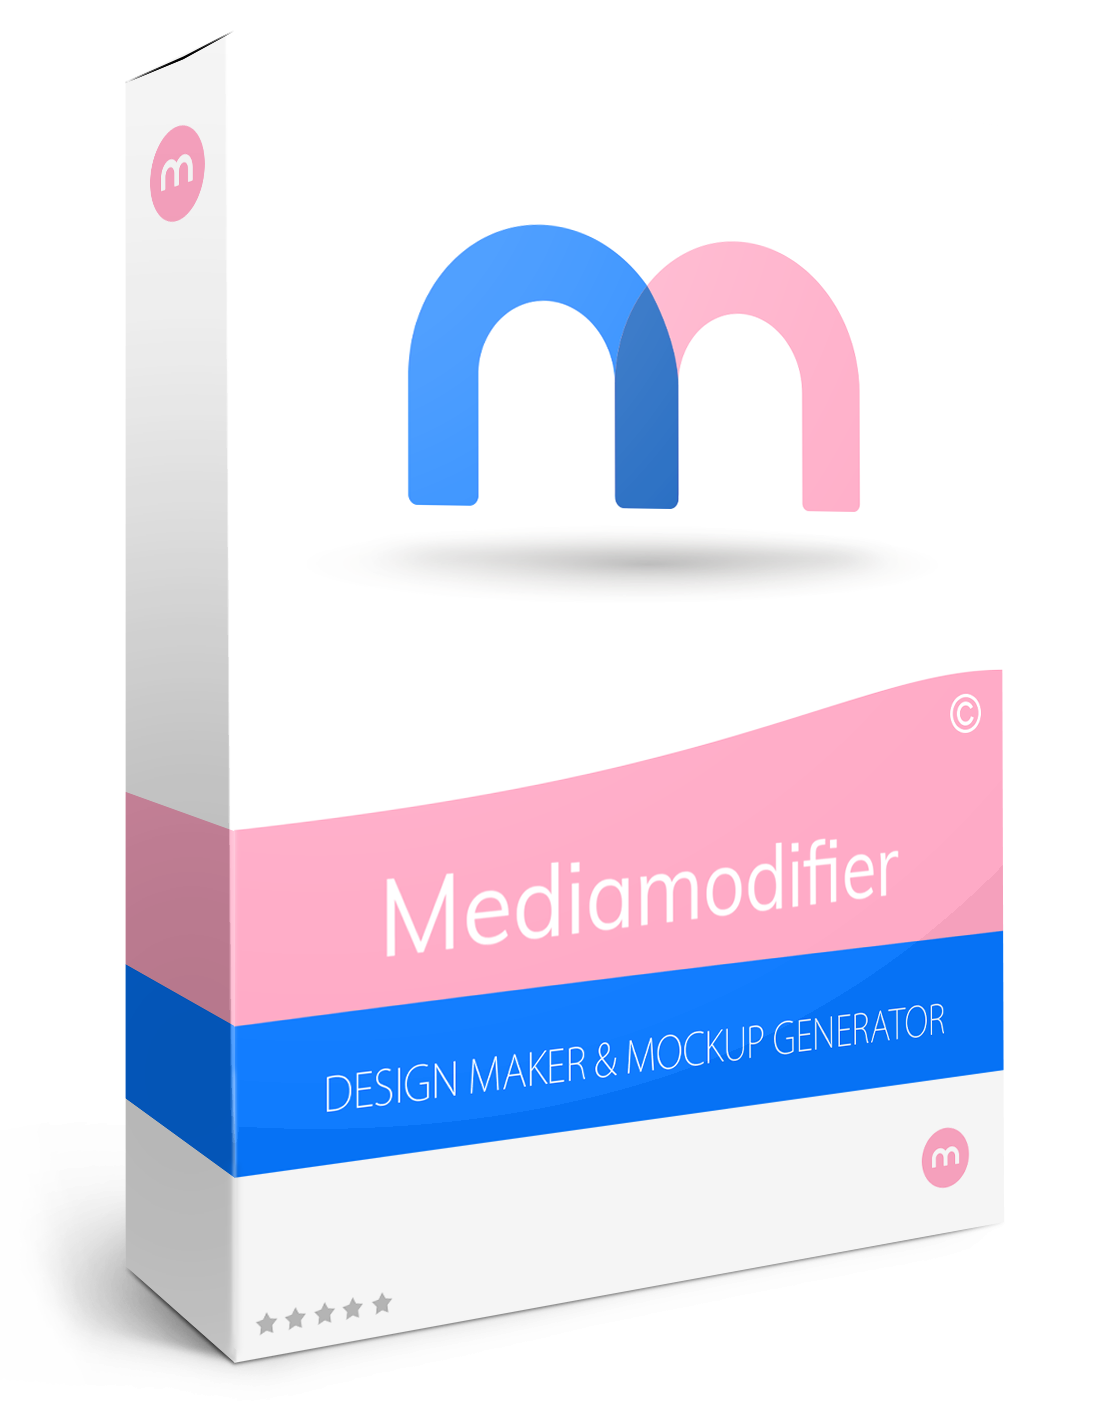 mediamodifier marketing design tool